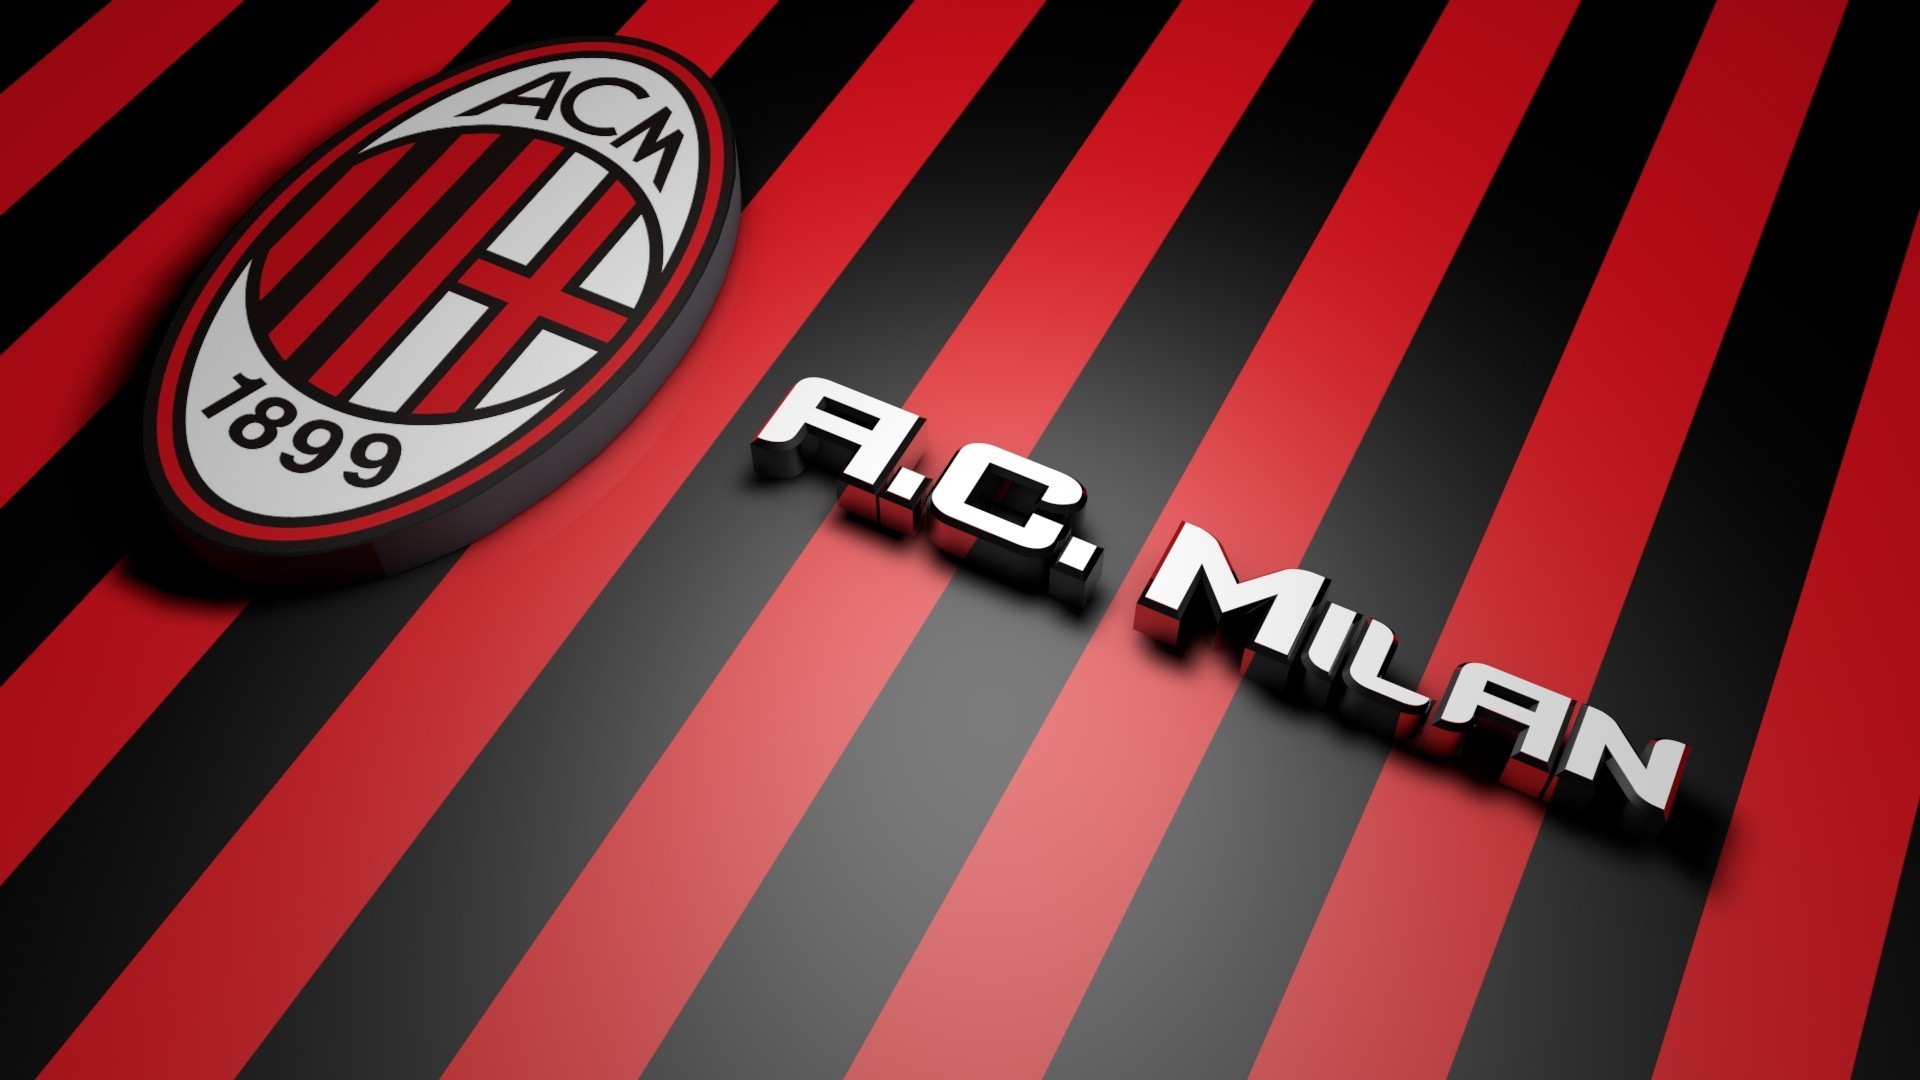 AC Milan - Wikipedia